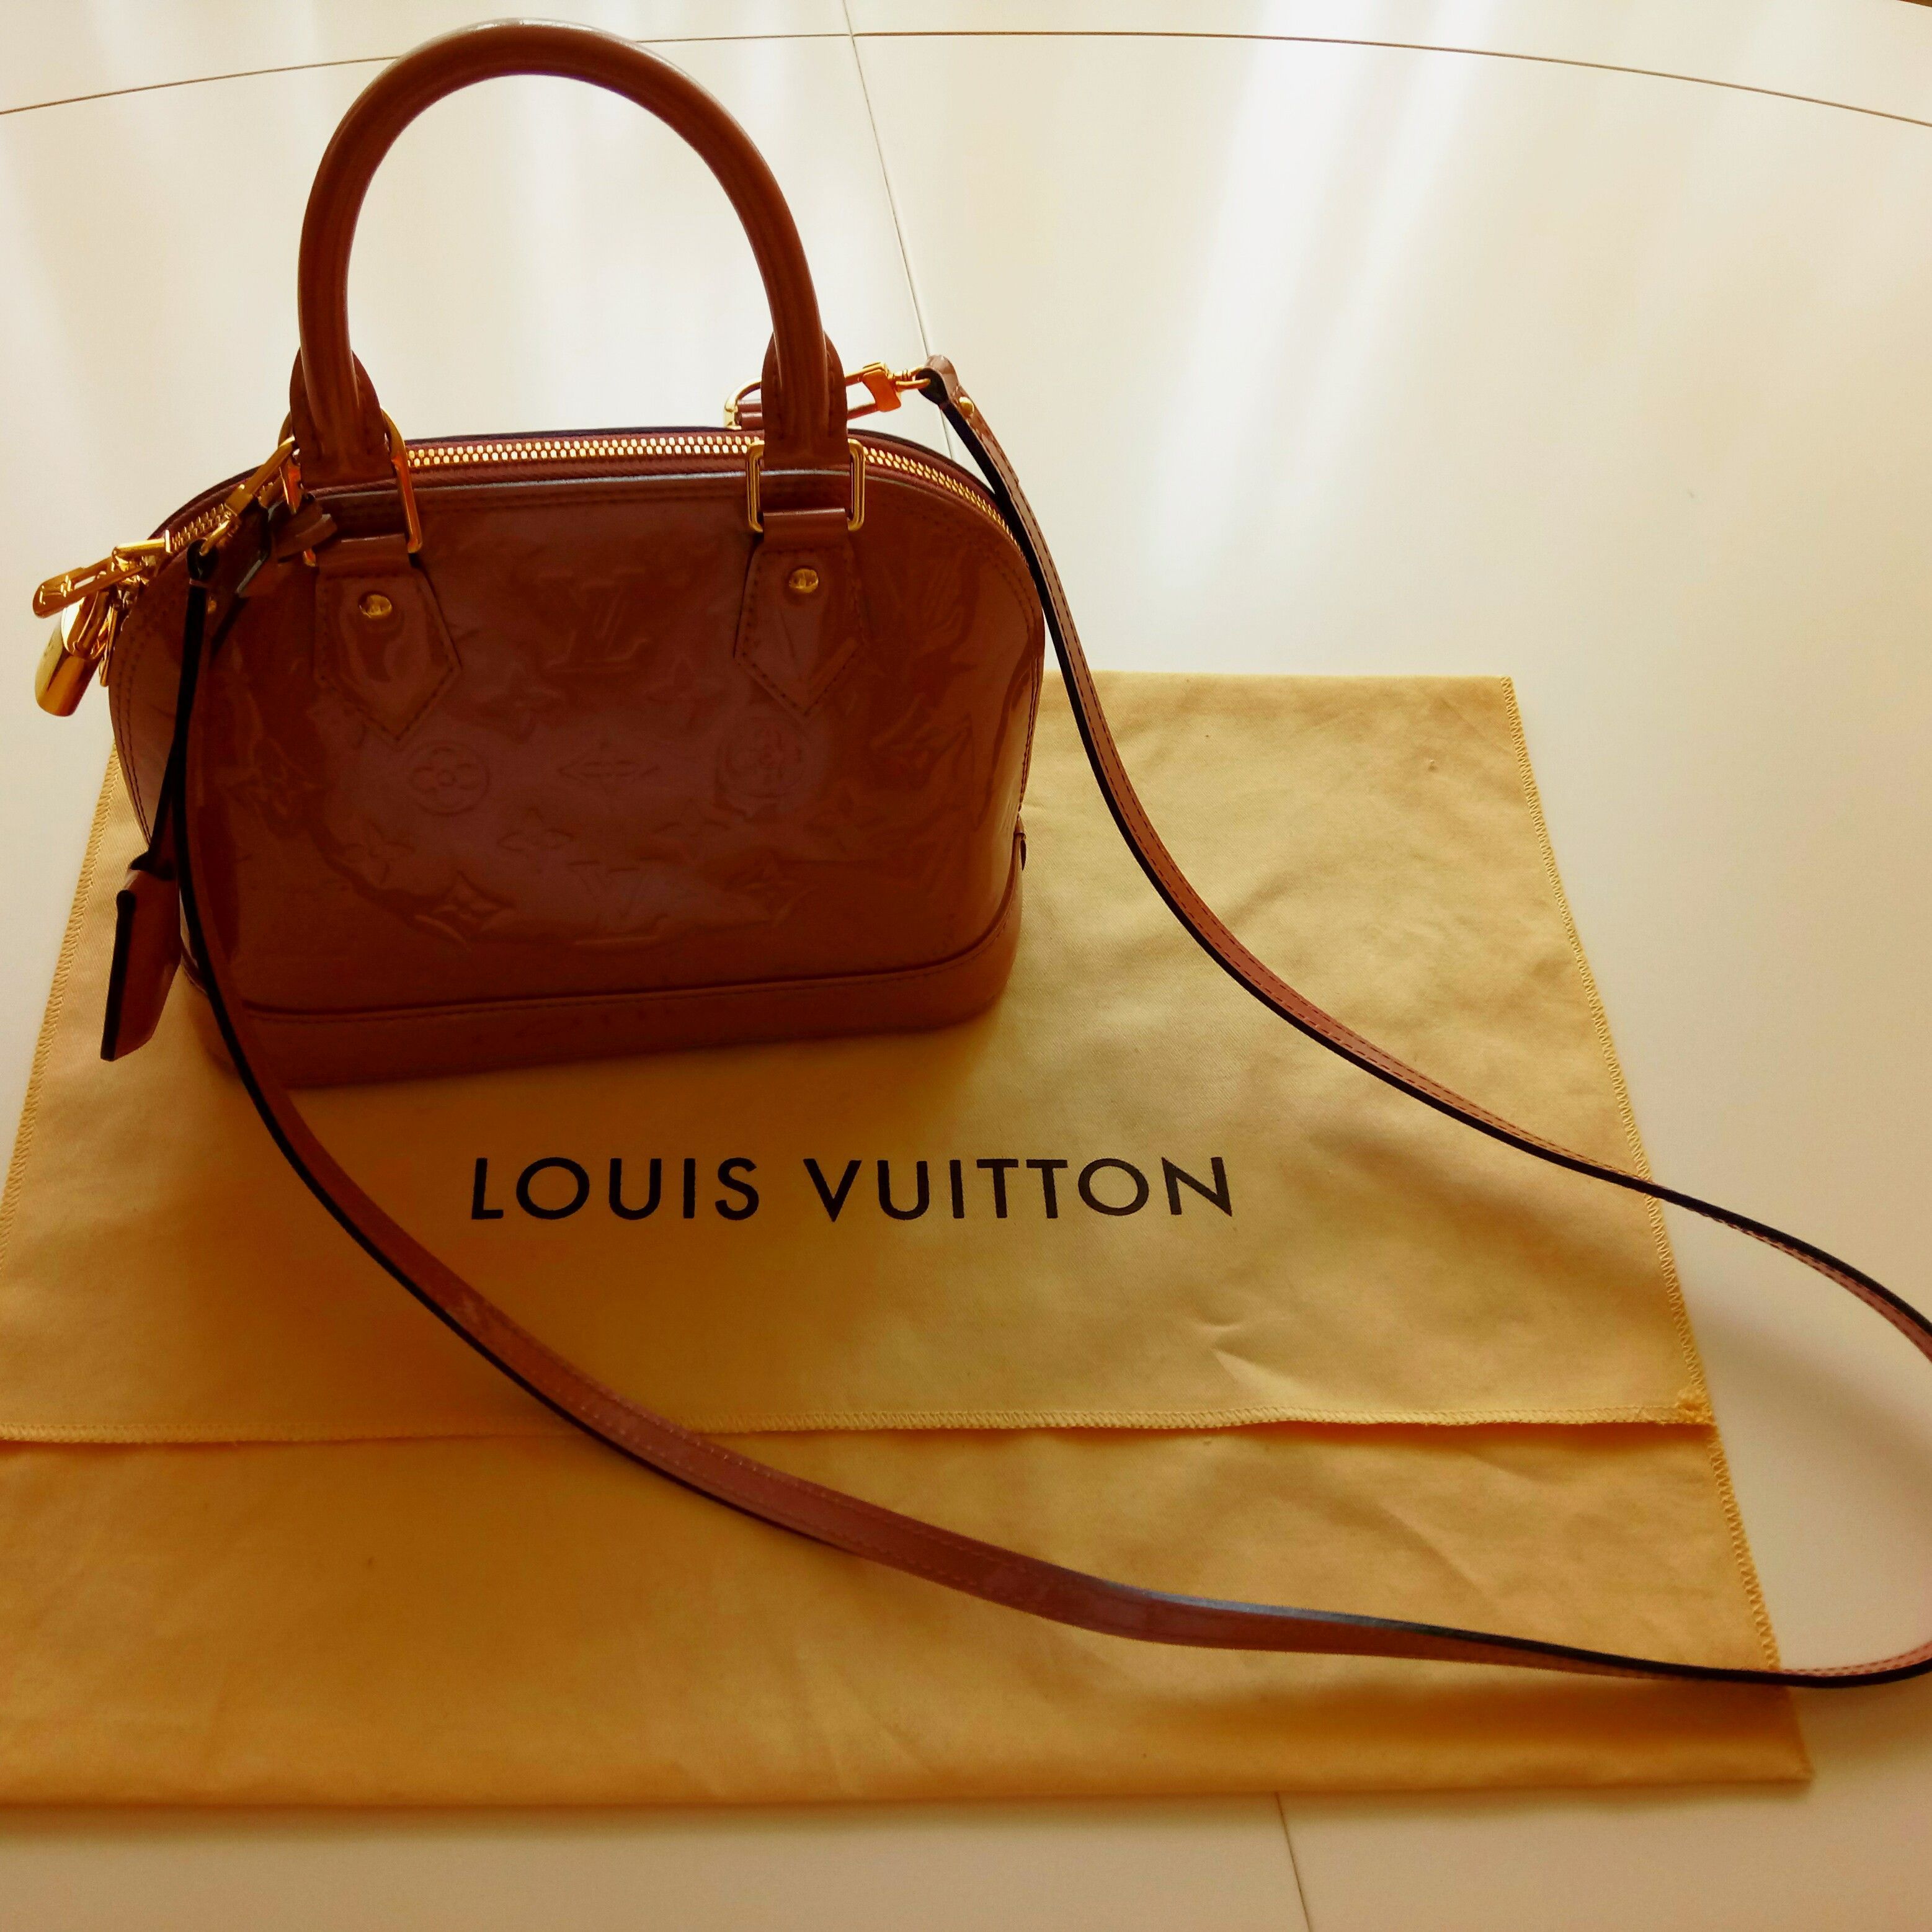 Louis Vuitton da Vinci сумка купить